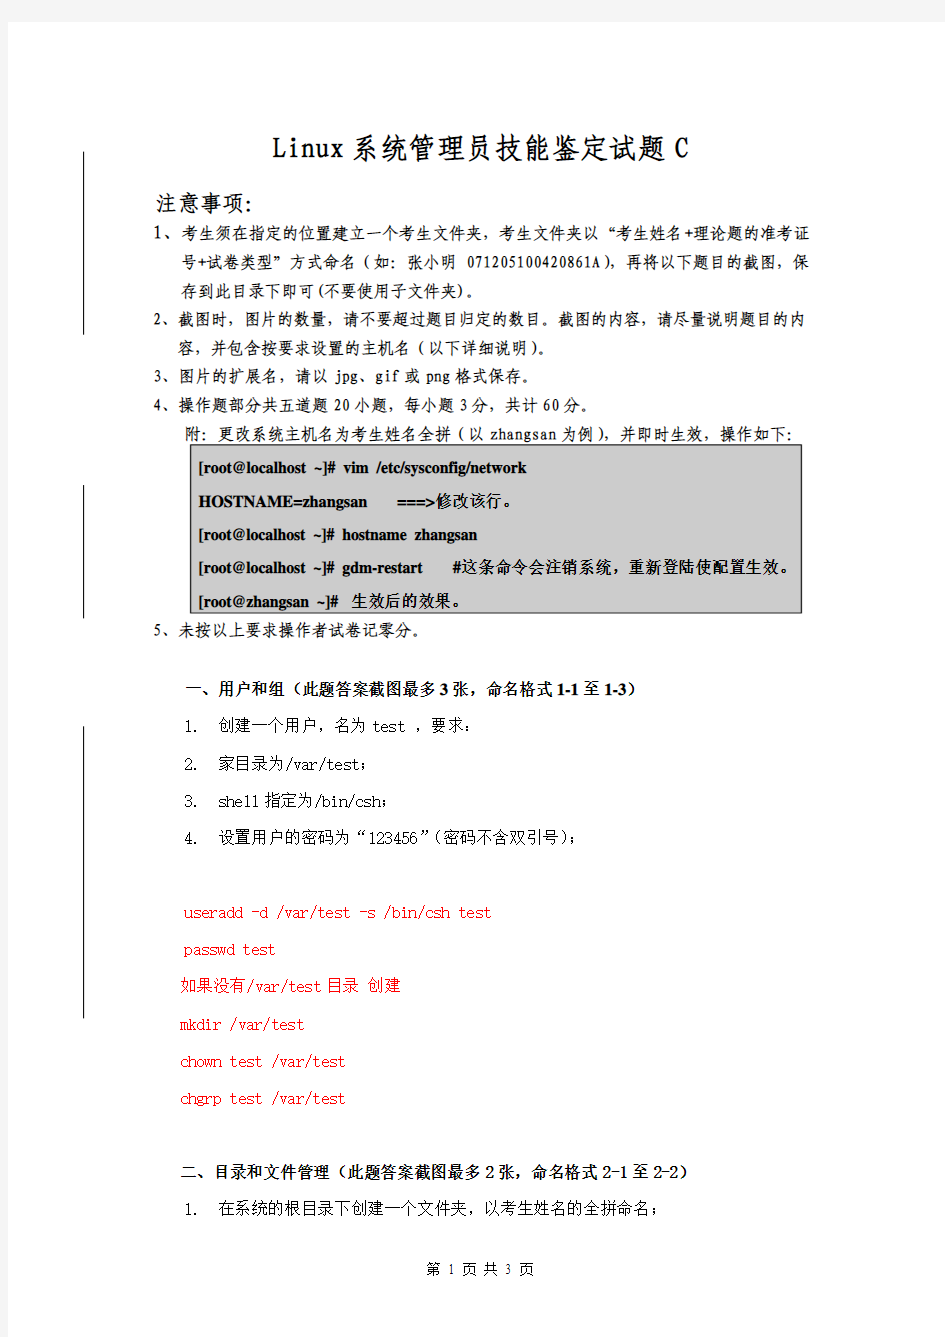 Linux系统管理员中级操作题03(答案) 广东科学技术职业学院